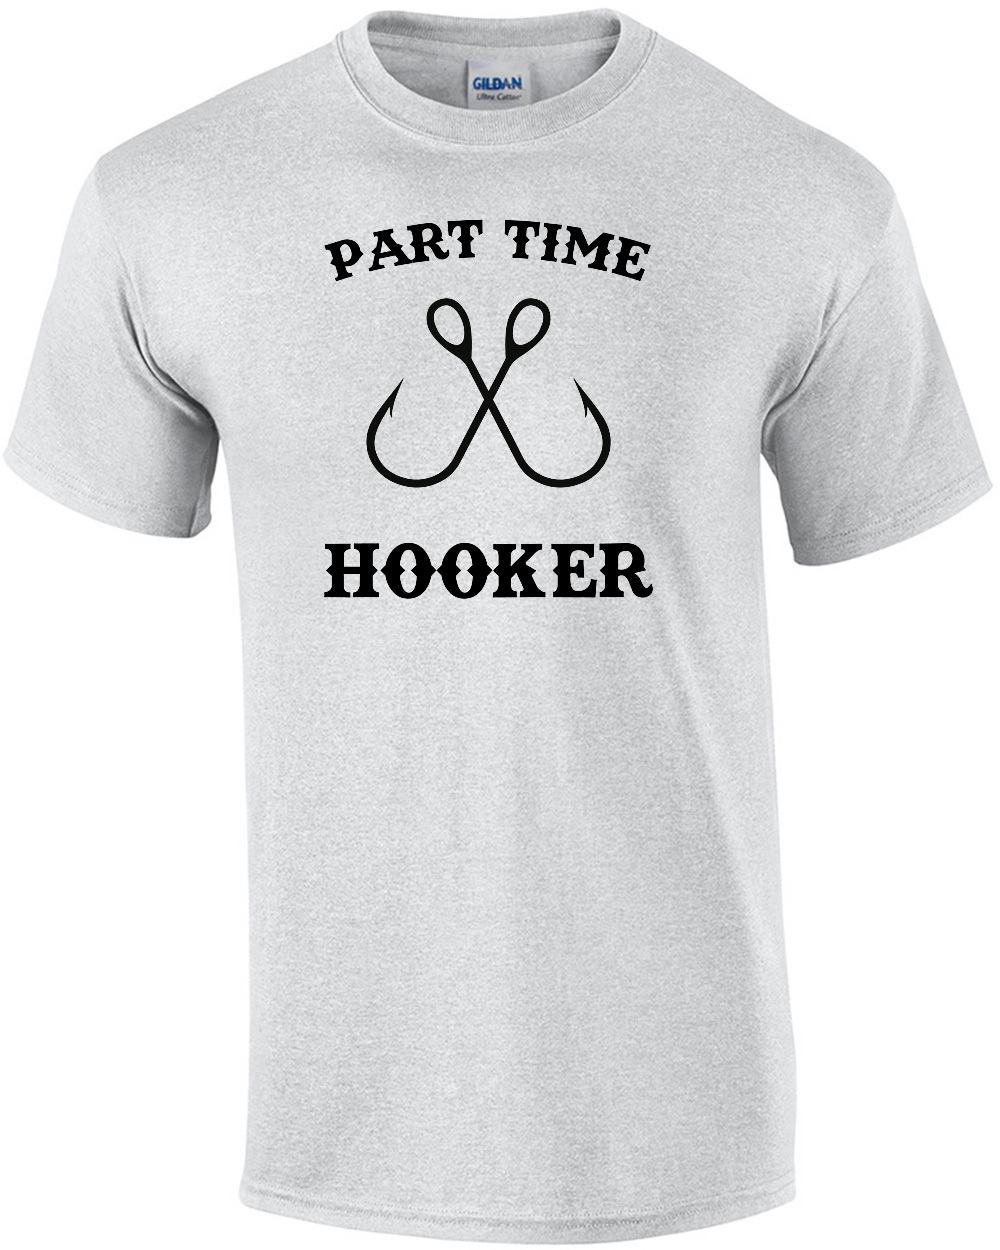 Part time hooker - funny fishing t-shirt